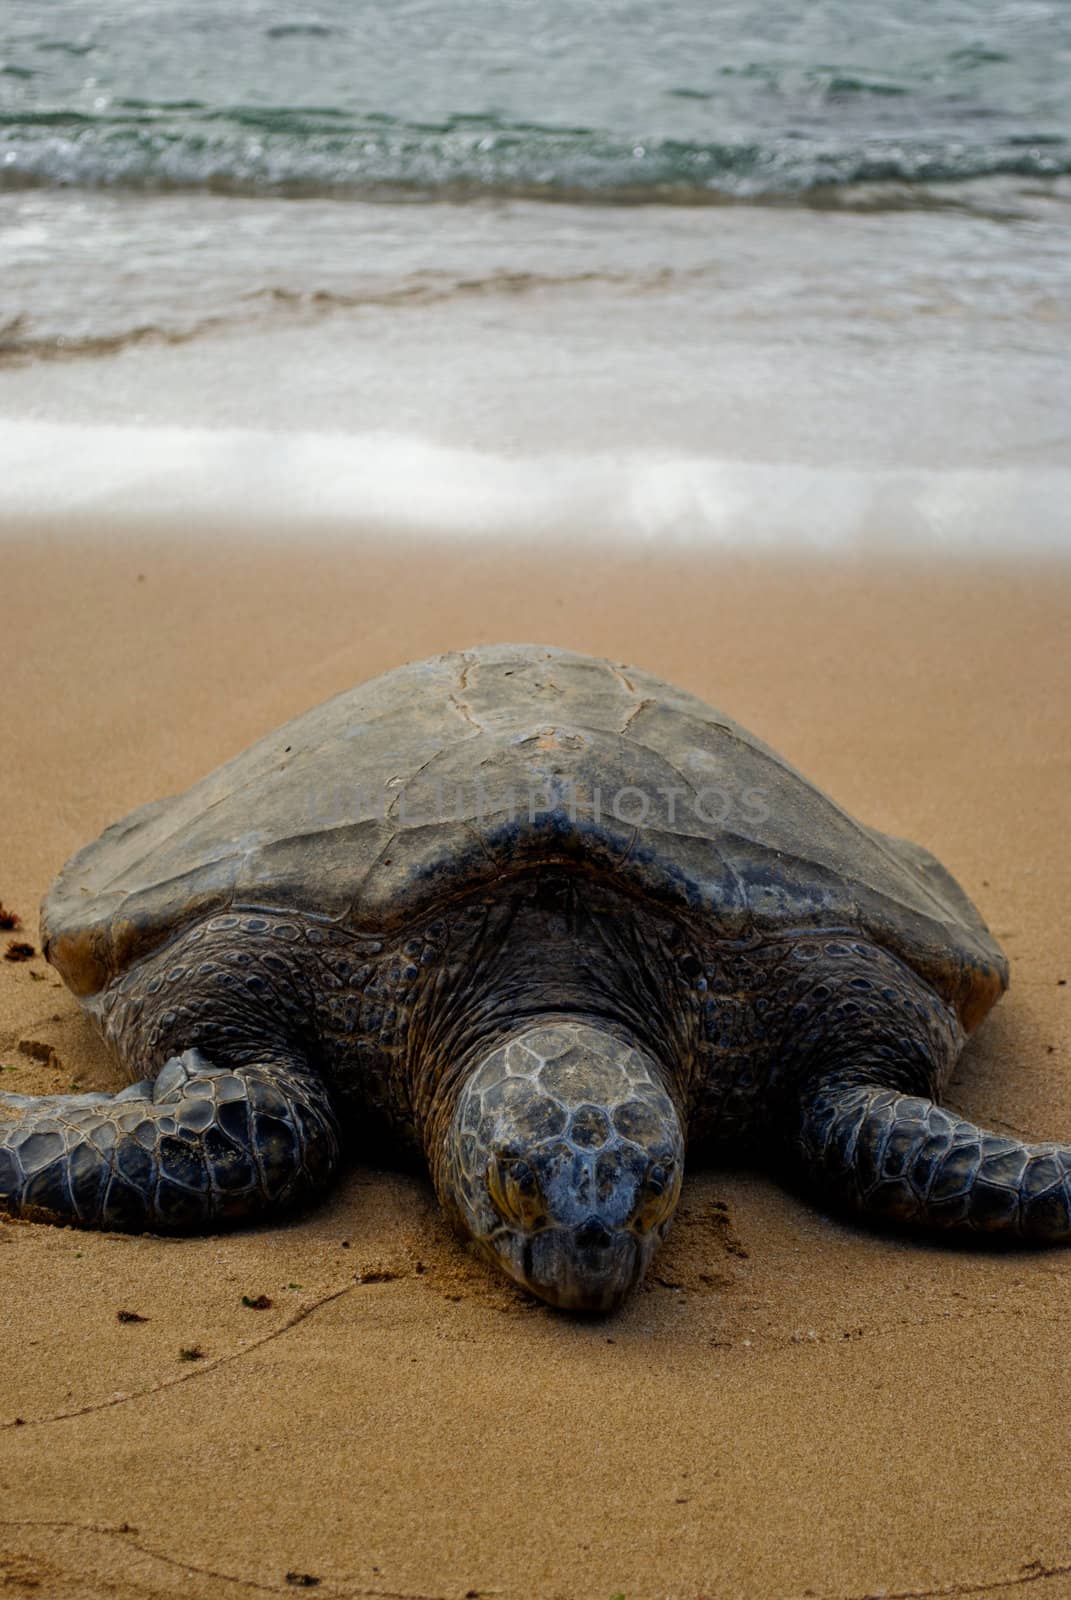 Endangered sea turtle by comosaydice